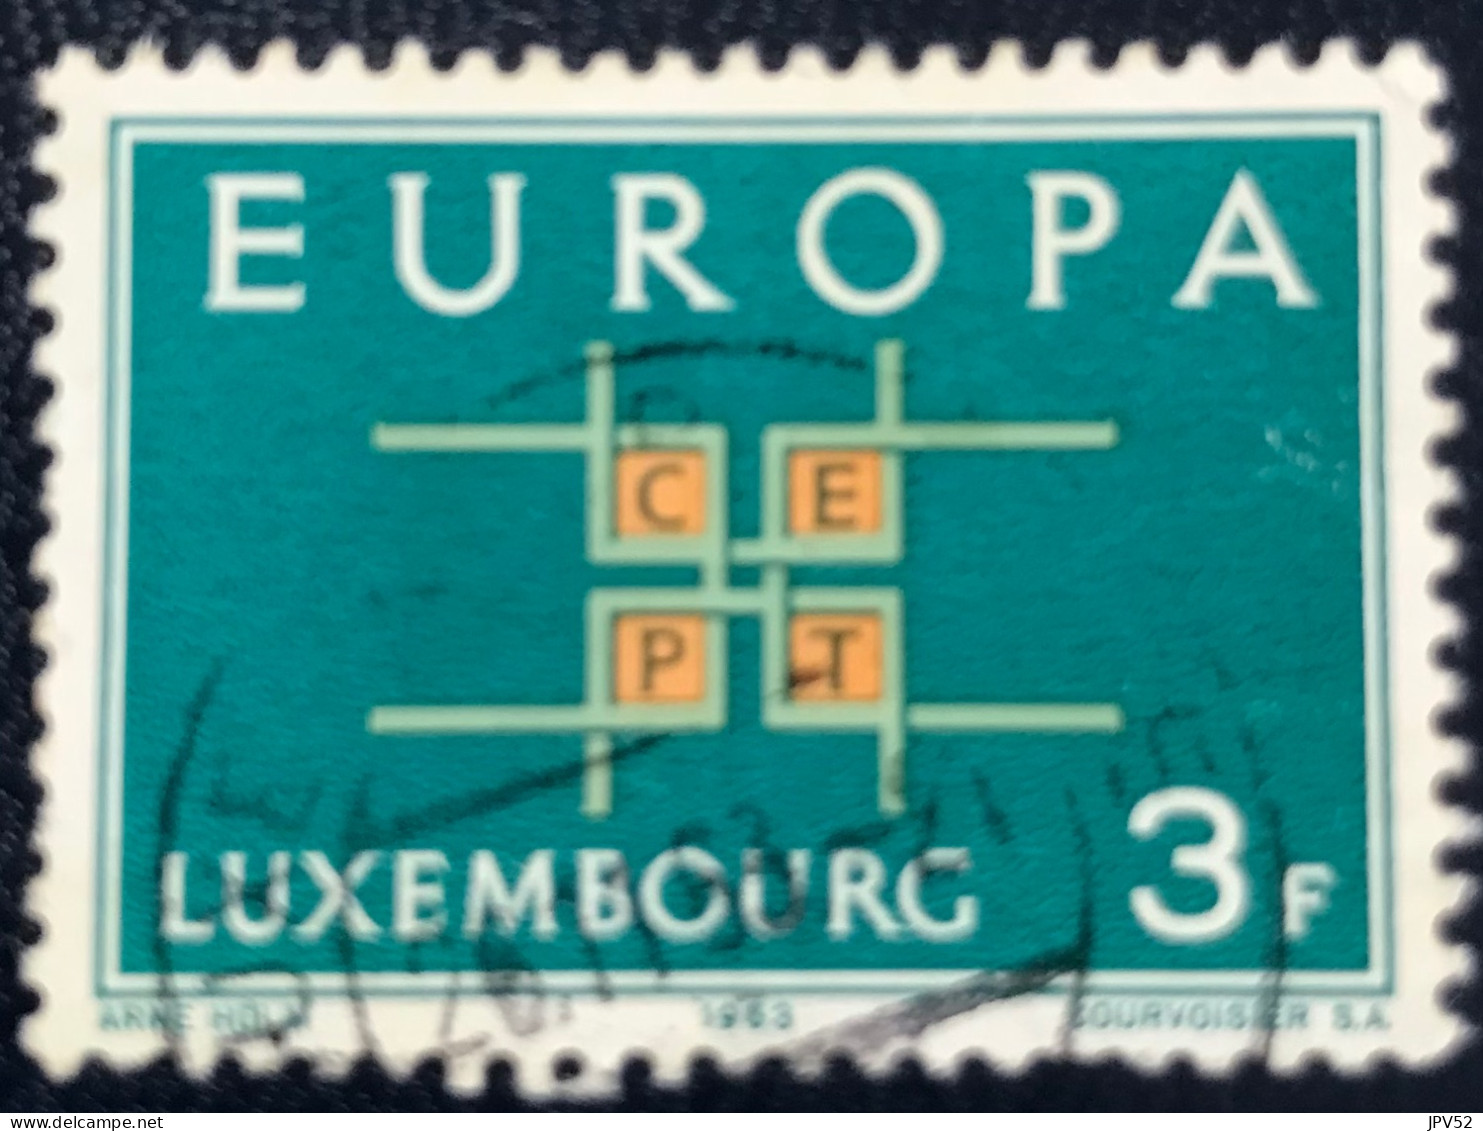 Luxembourg - Luxemburg - C18/31 - 1963 - (°)used - Michel 680 - Europa - CEPT - Gebraucht